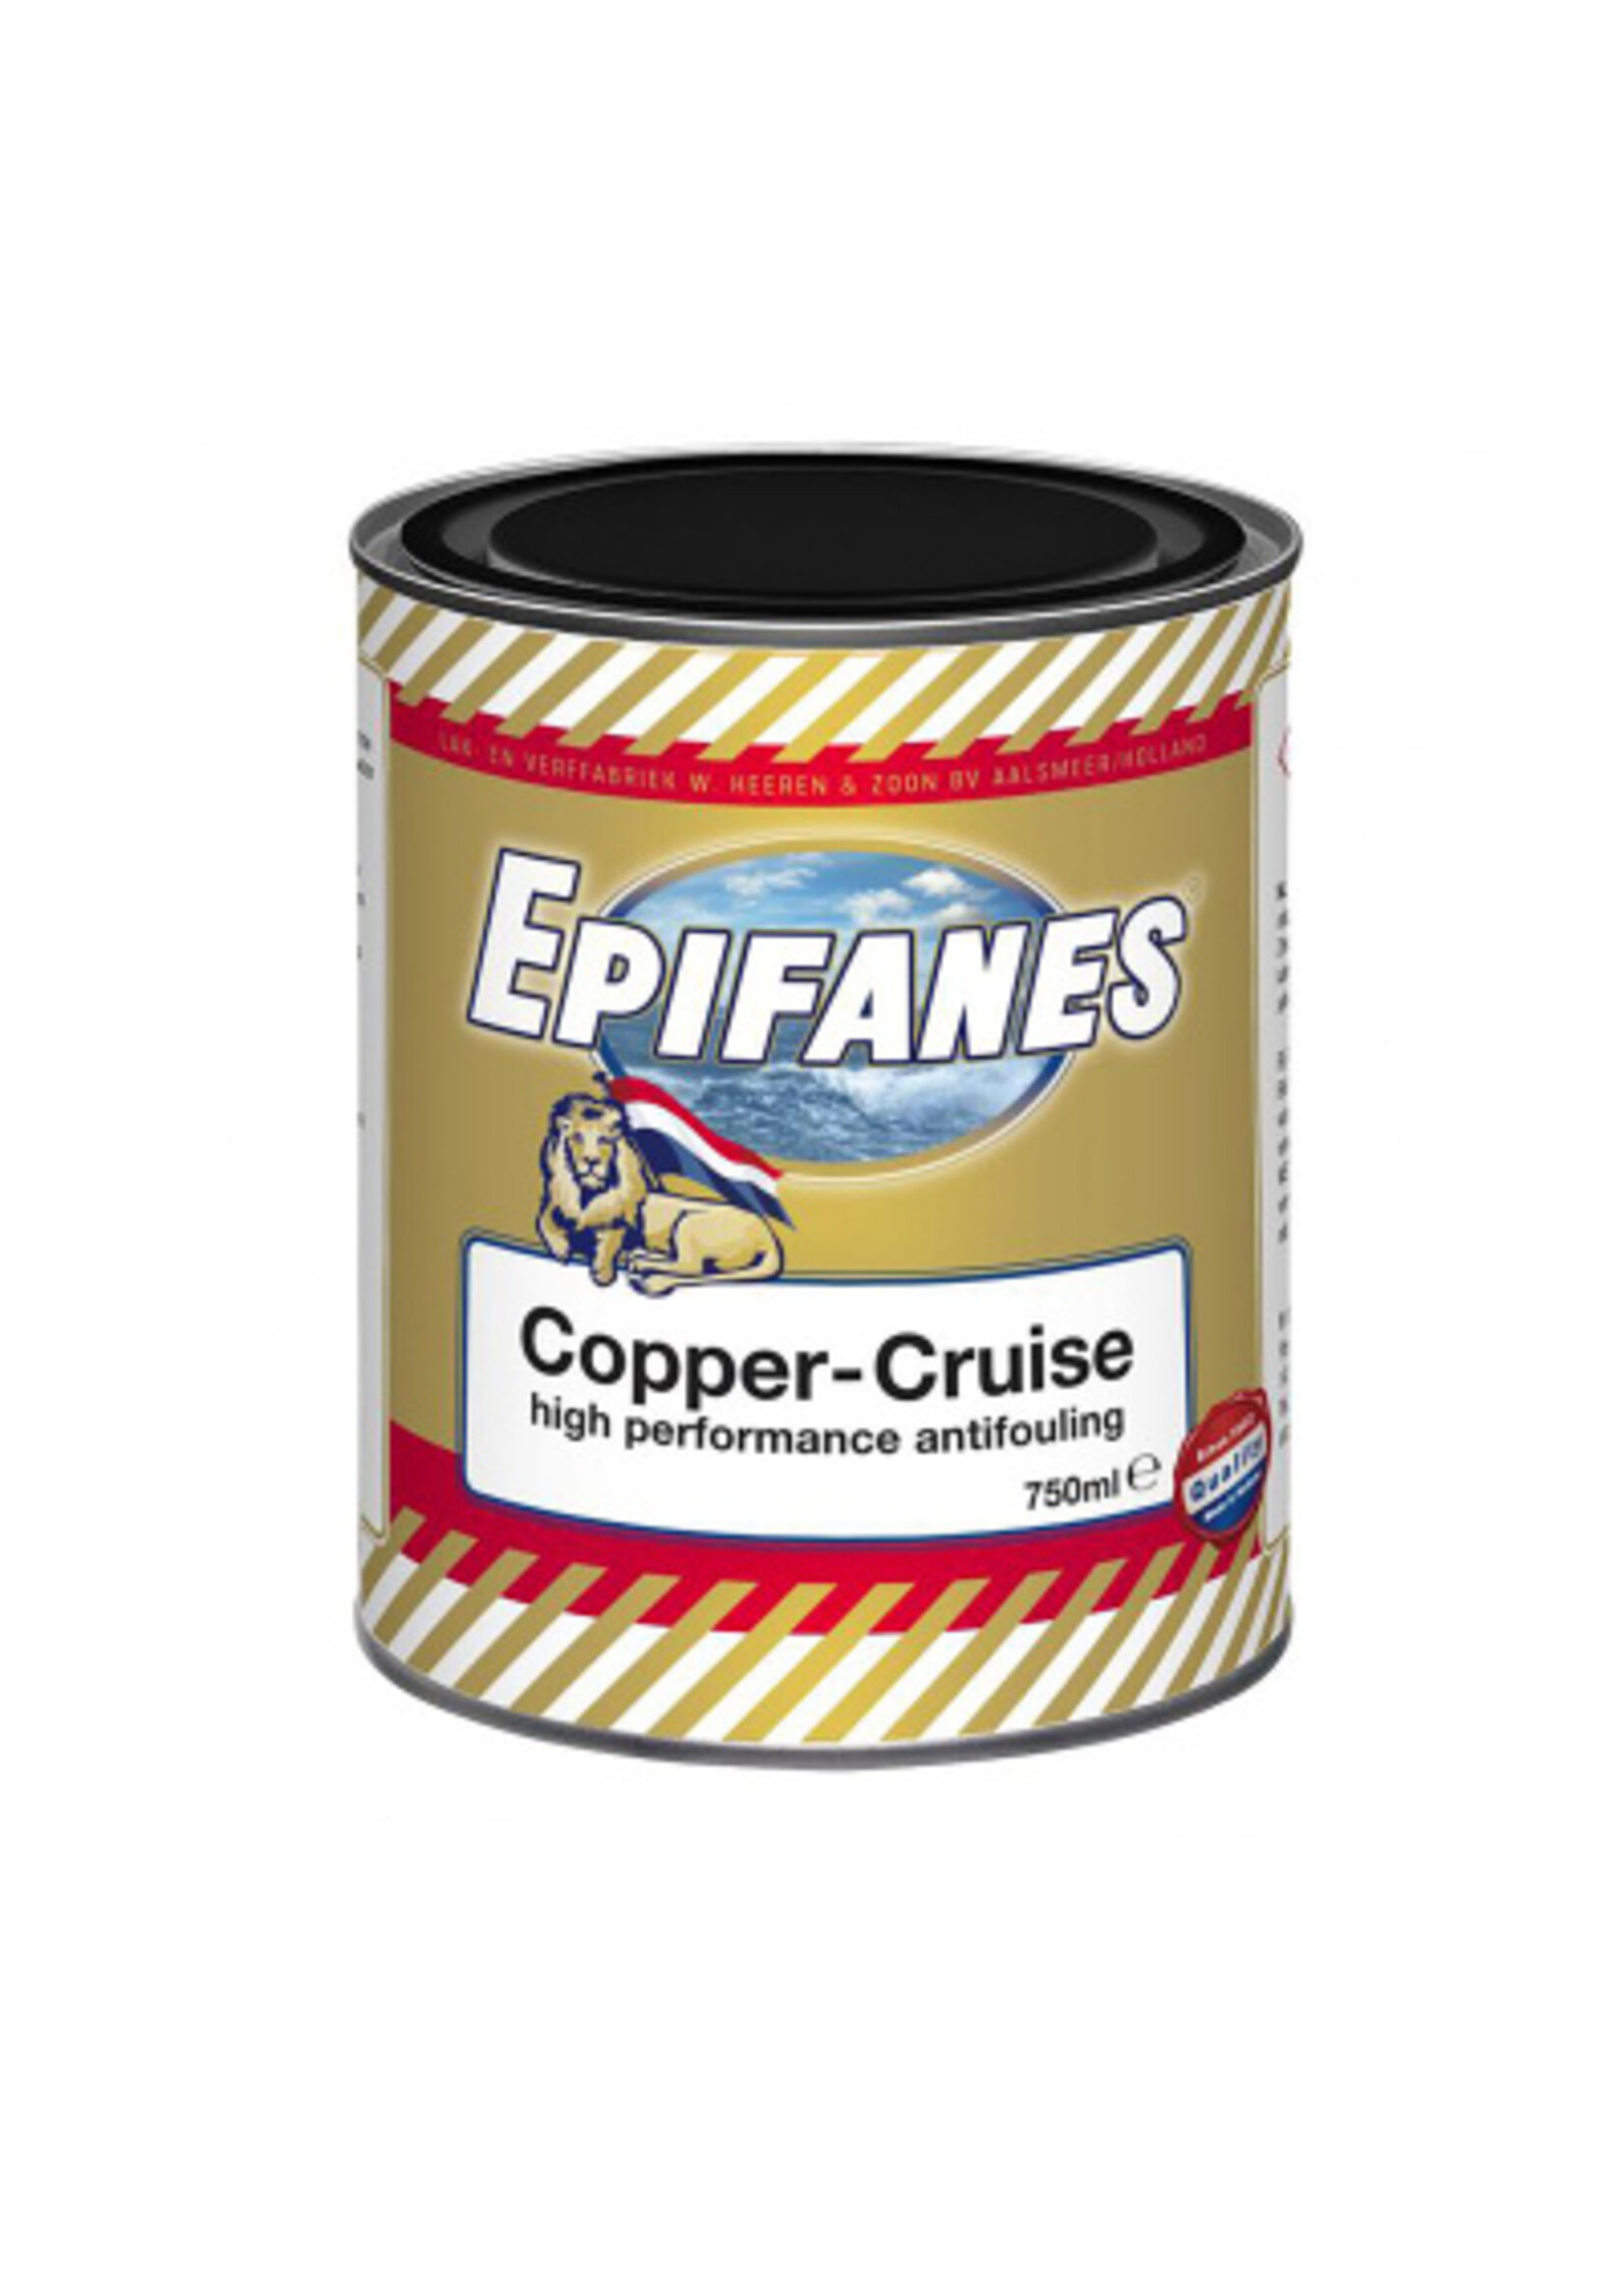 Epifanes Copper-Cruise - Antifouling Lichtblauw